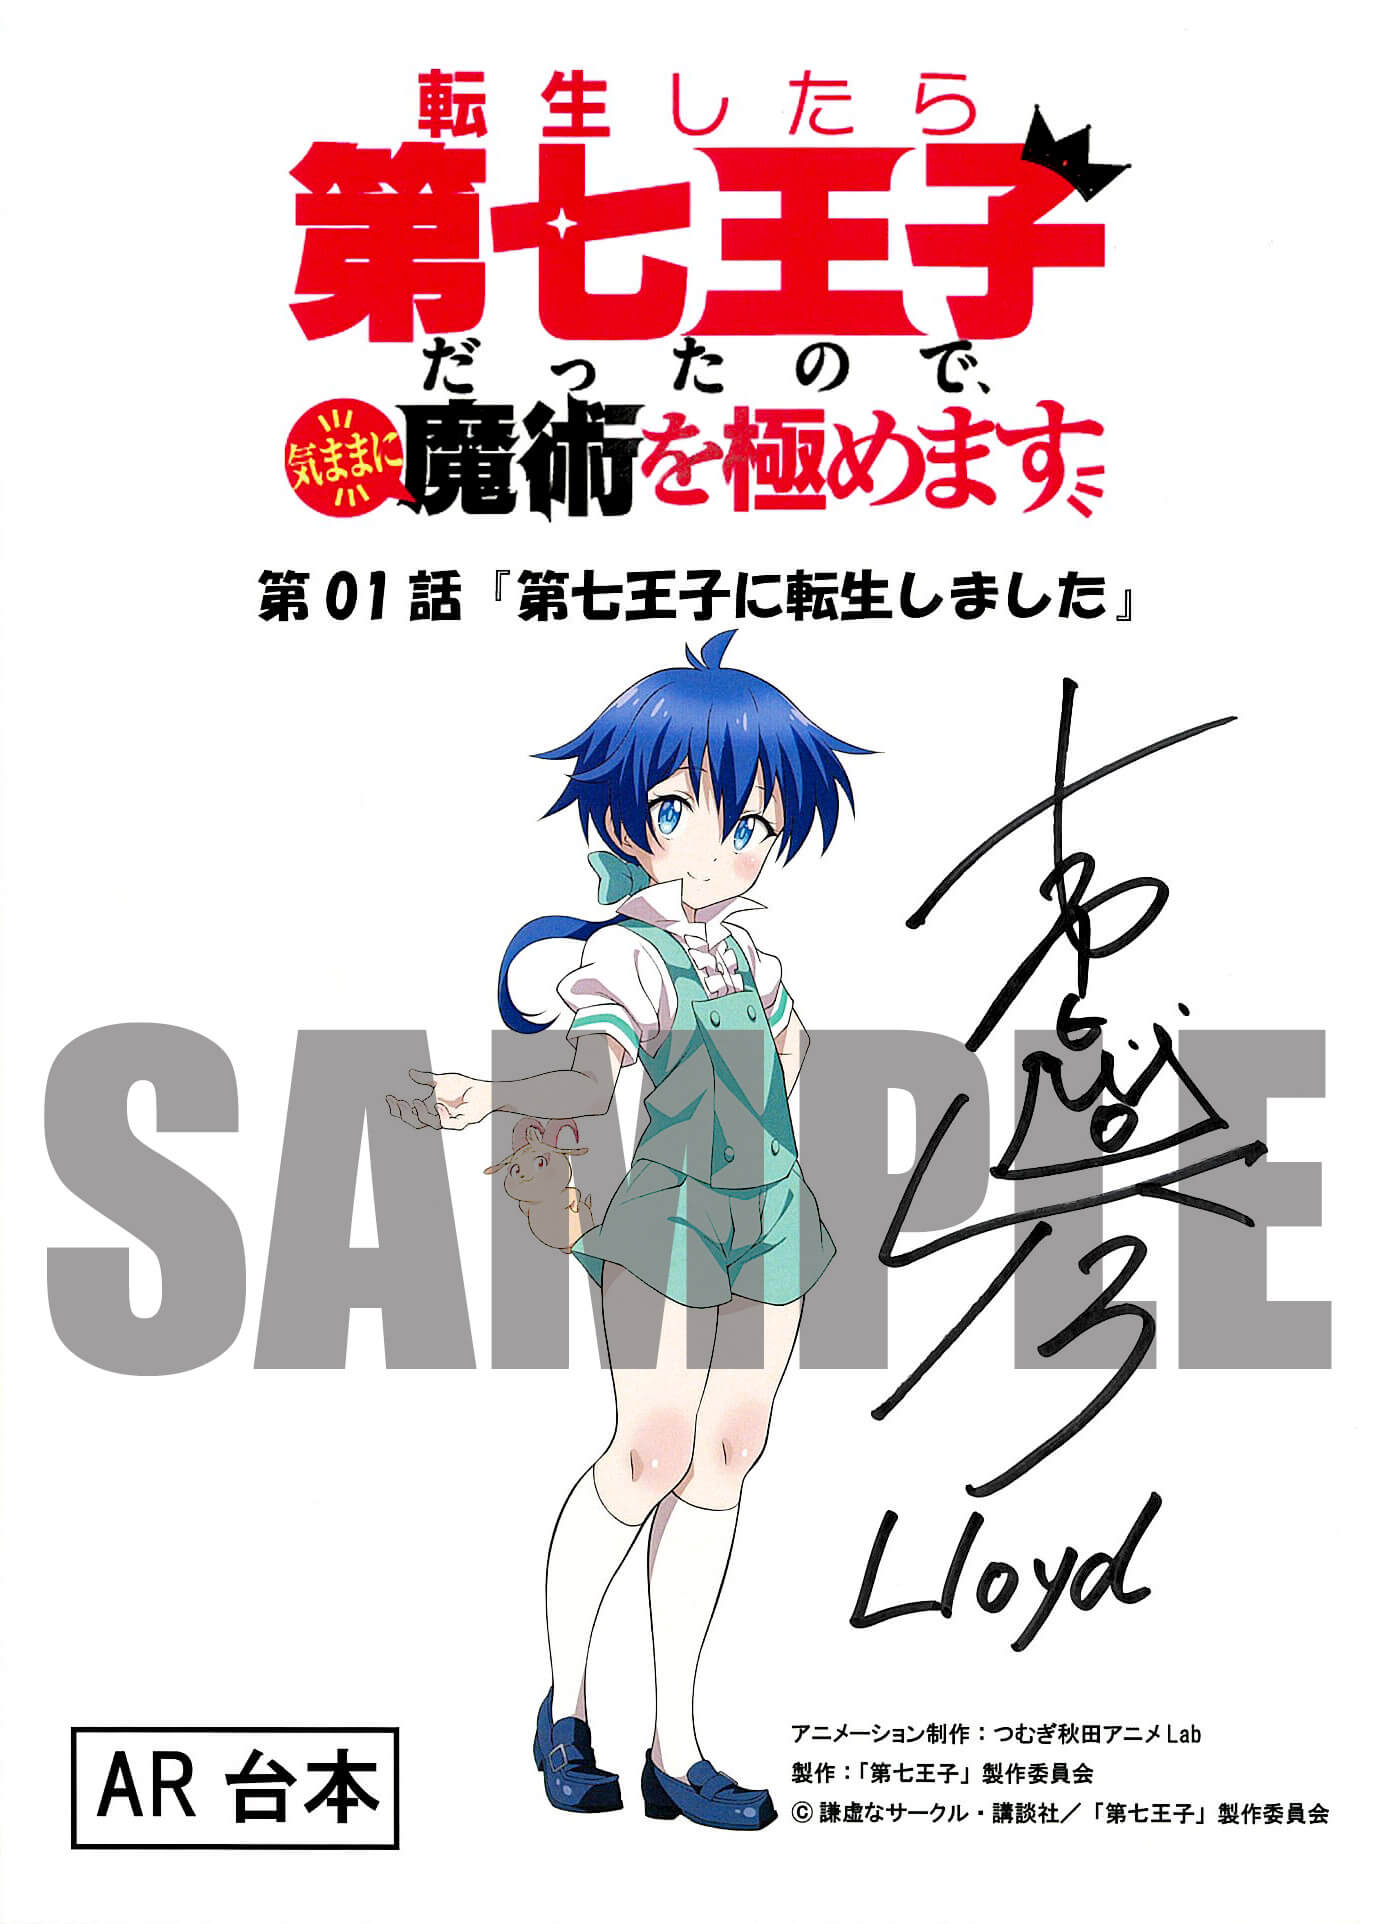 Script signed by Makoto Koichi (Lloyd)